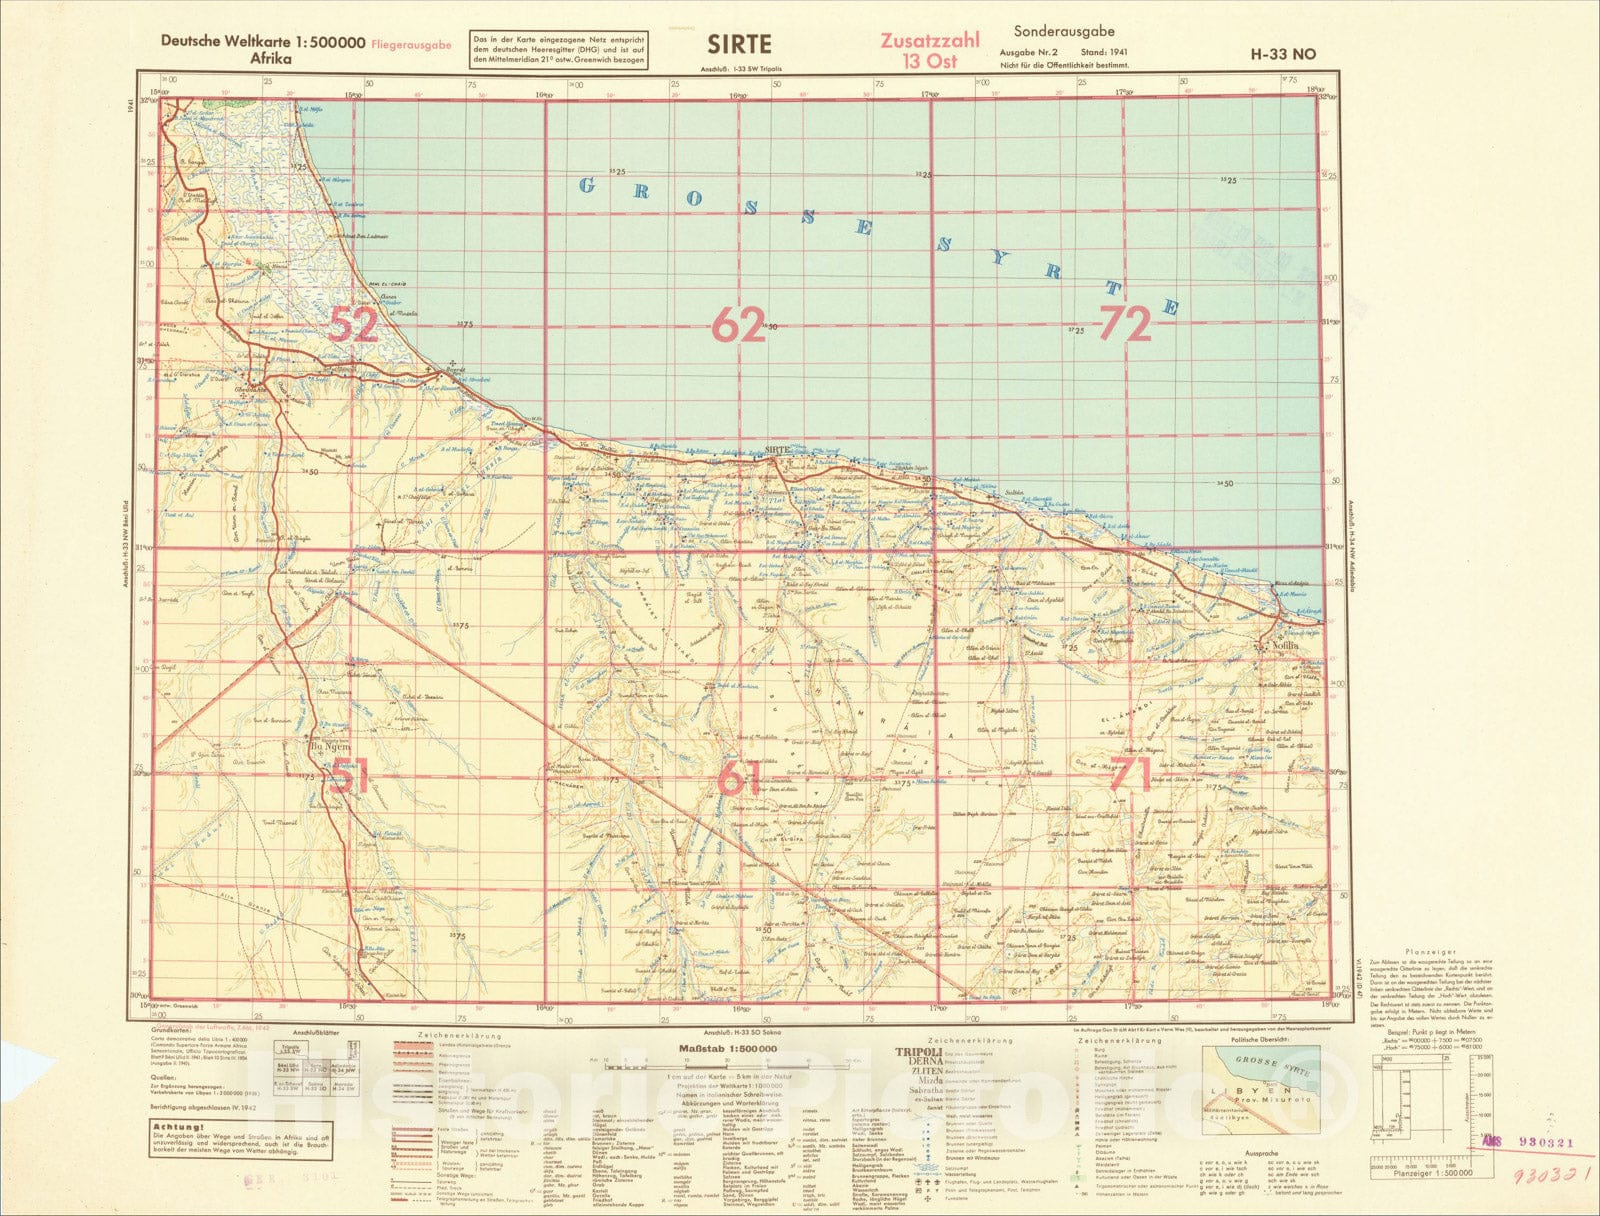 Historic Map : (Second World War - North Africa) Deutsche Weltkarte 1:500000 Afrika, 1942, General Staff of the German Army, Vintage Wall Art